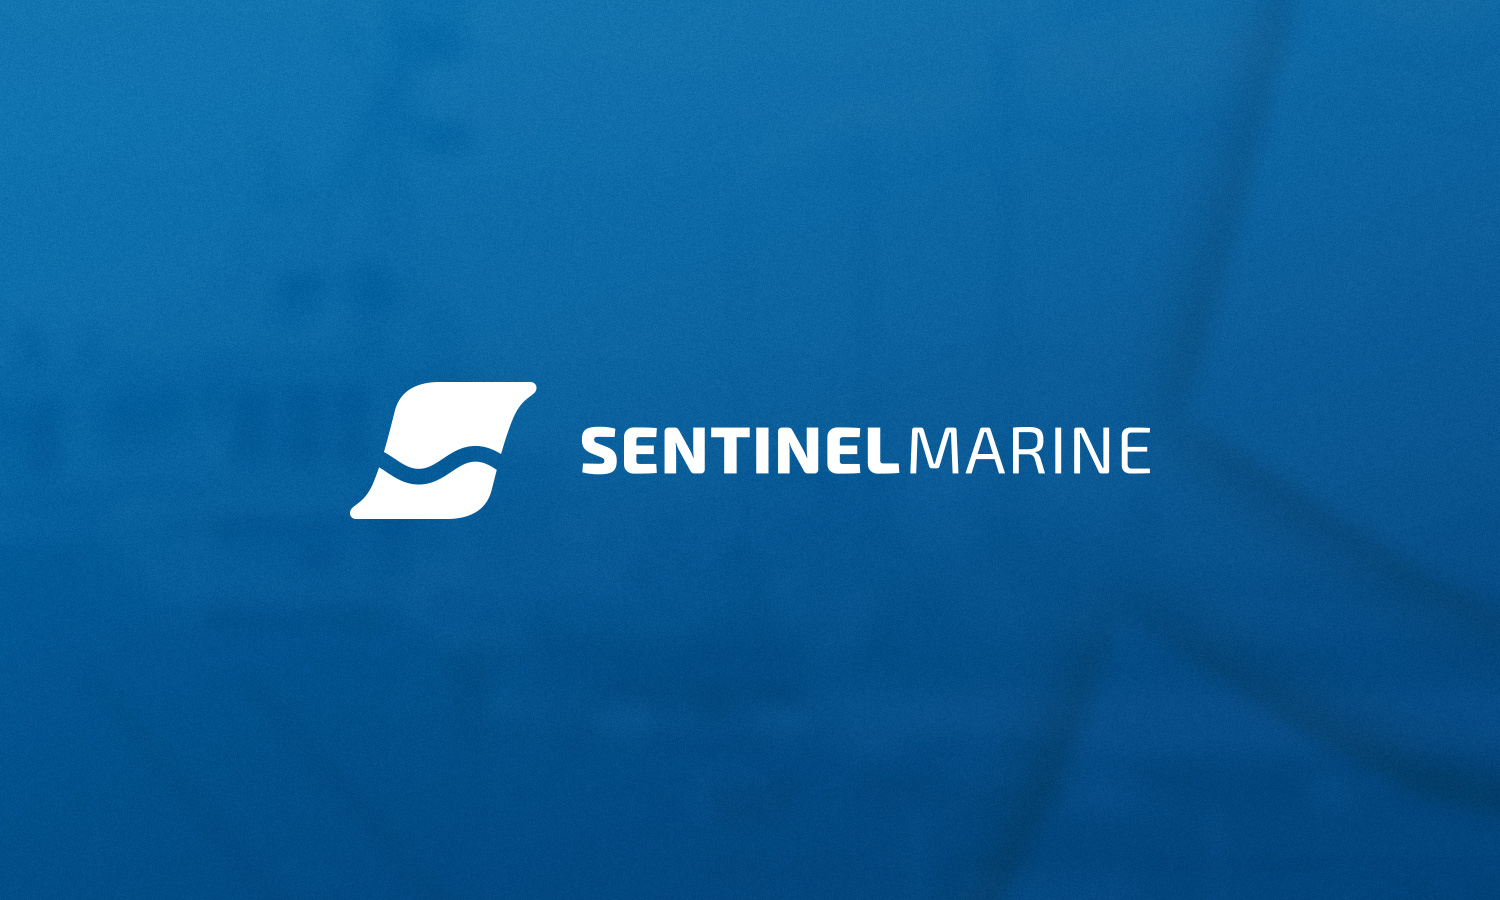 Sentinel Marine Logo